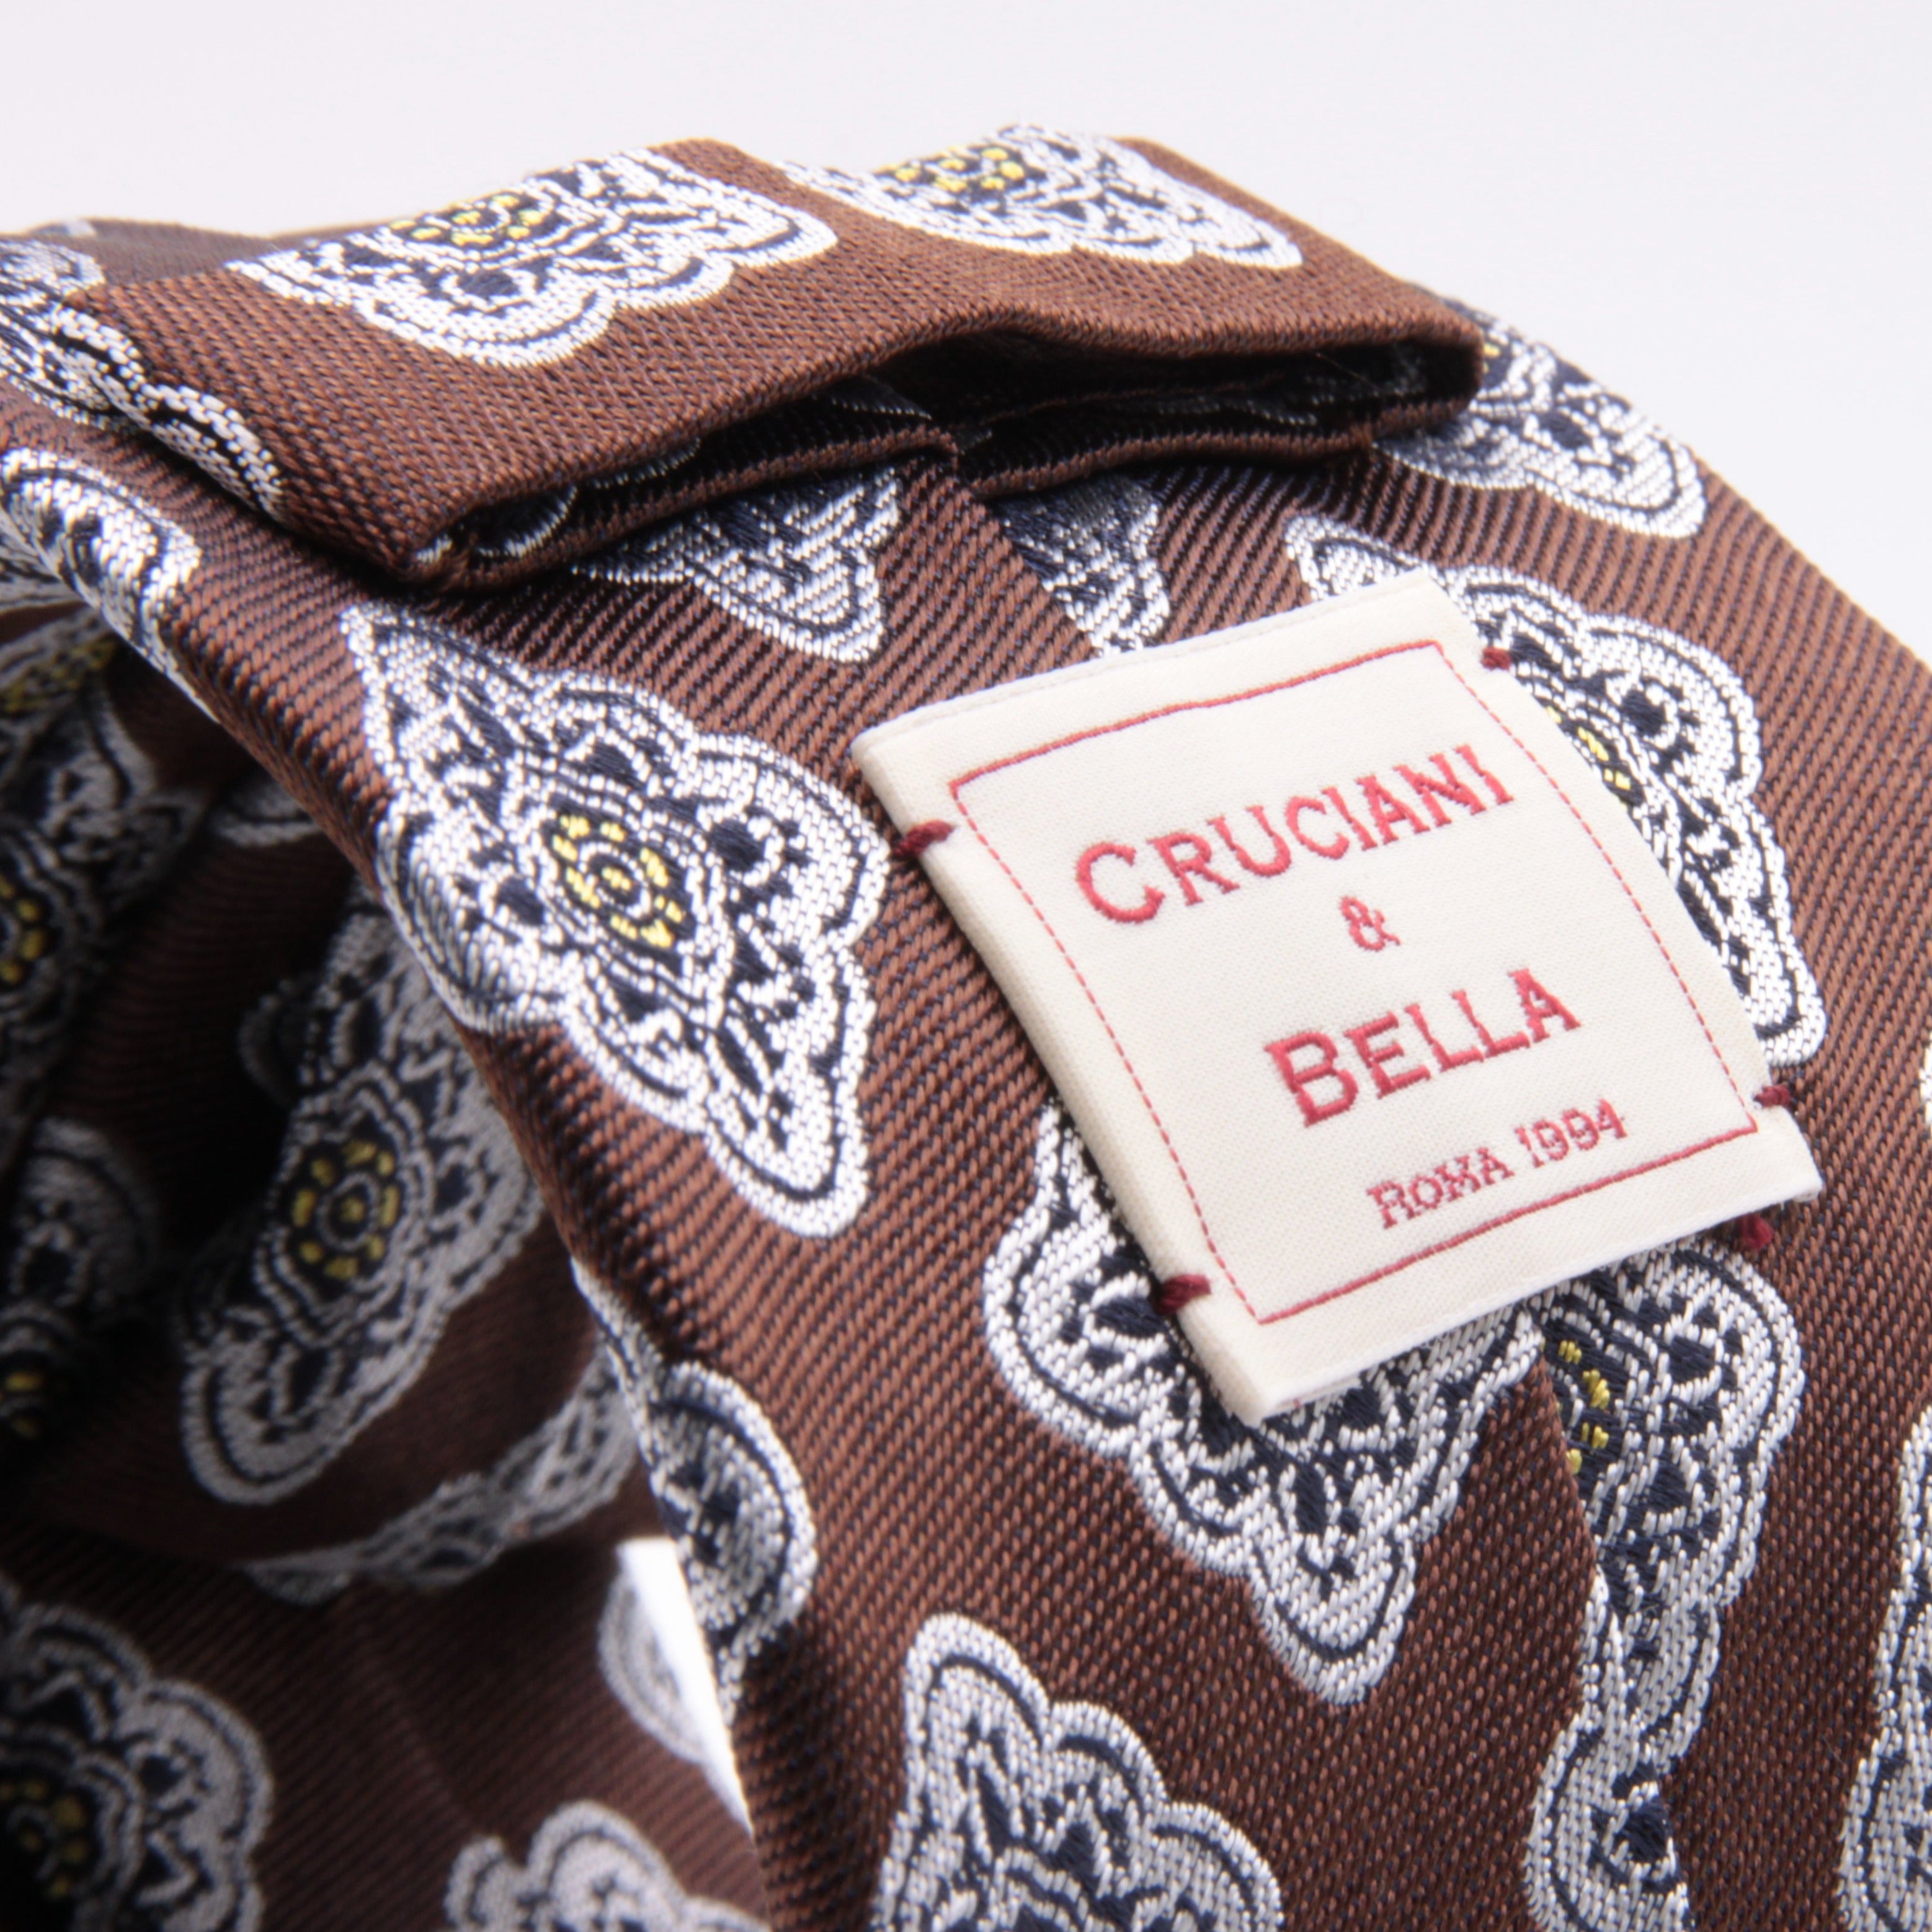 Cruciani & Bella 100% Silk Jacquard  Brown, Navy, Light yellow and White geometrical motif tie Handmade in Italy 8 cm x 150 cm #4421